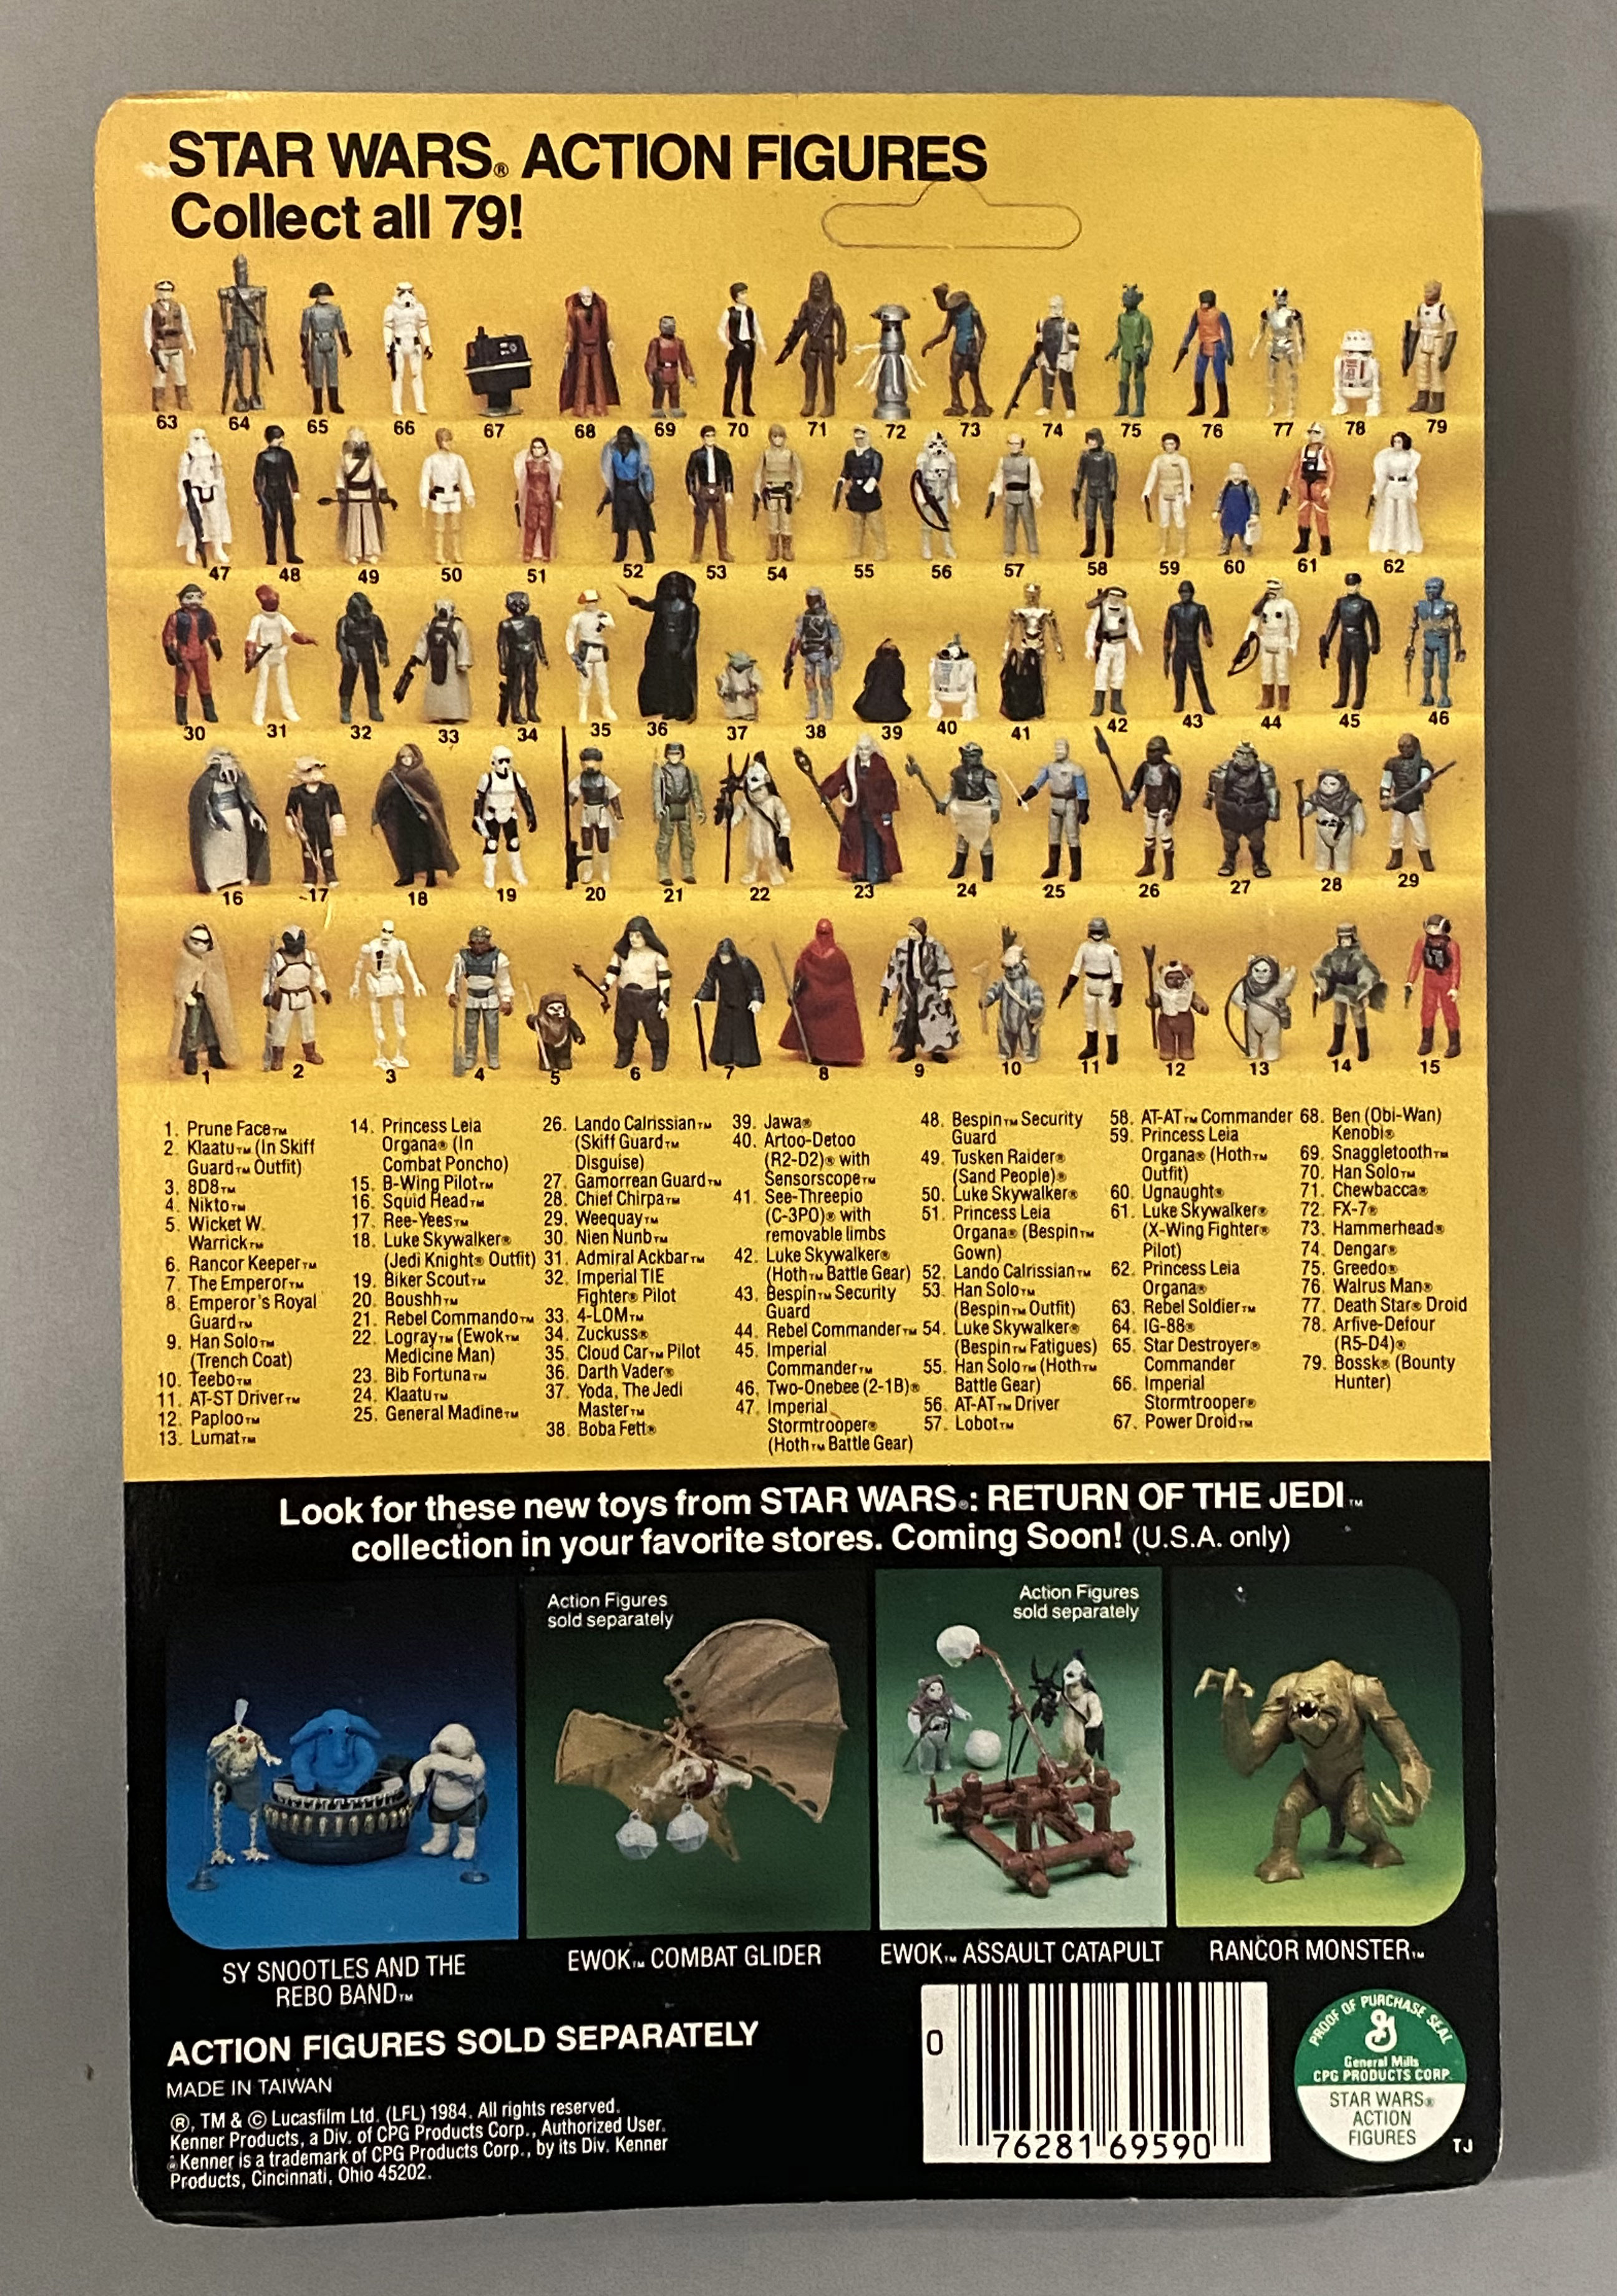 5 vintage Star Wars ROTJ Return Of The Jedi figures on original backing cards: Arfive-Defour (R5-D4) - Image 7 of 12